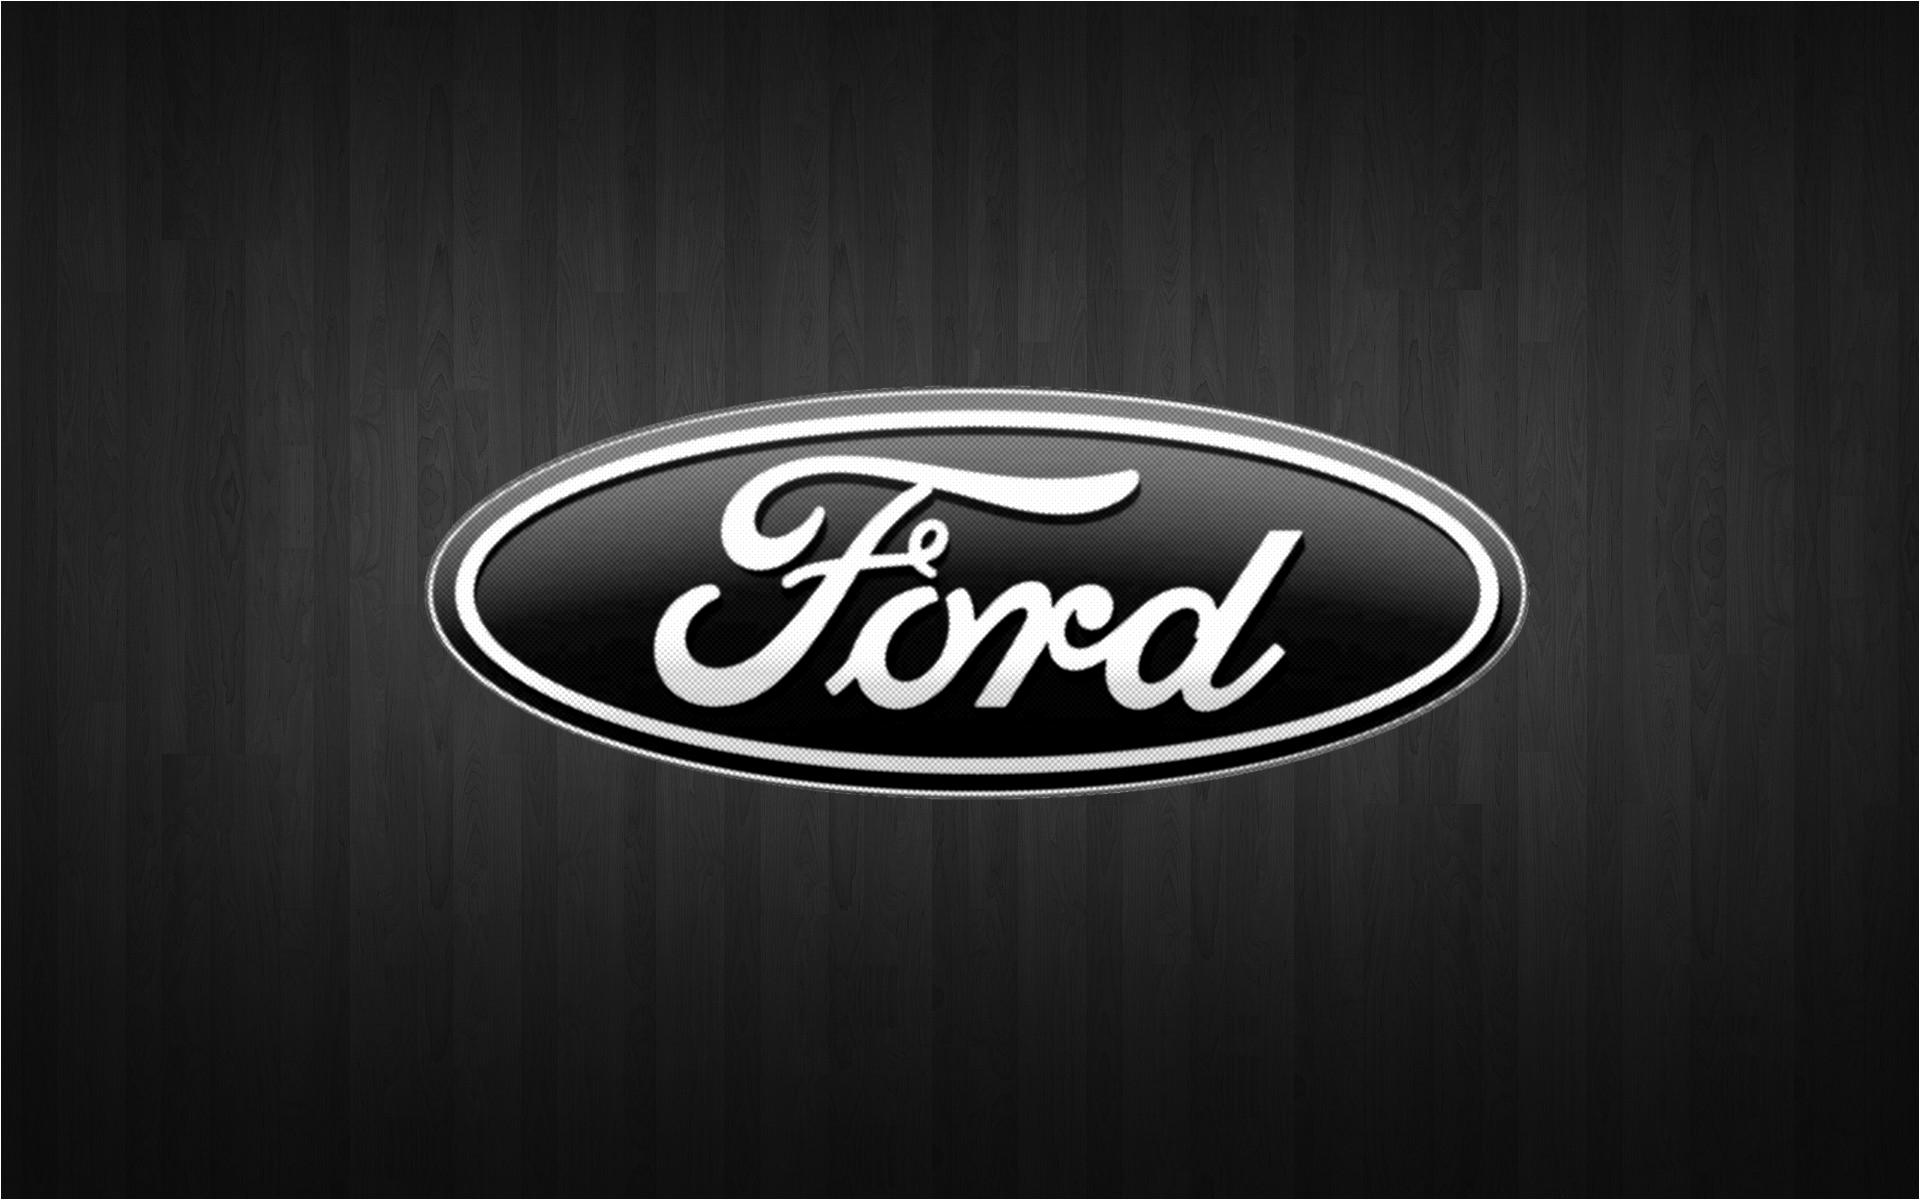 Ford, brands, logos - desktop wallpaper